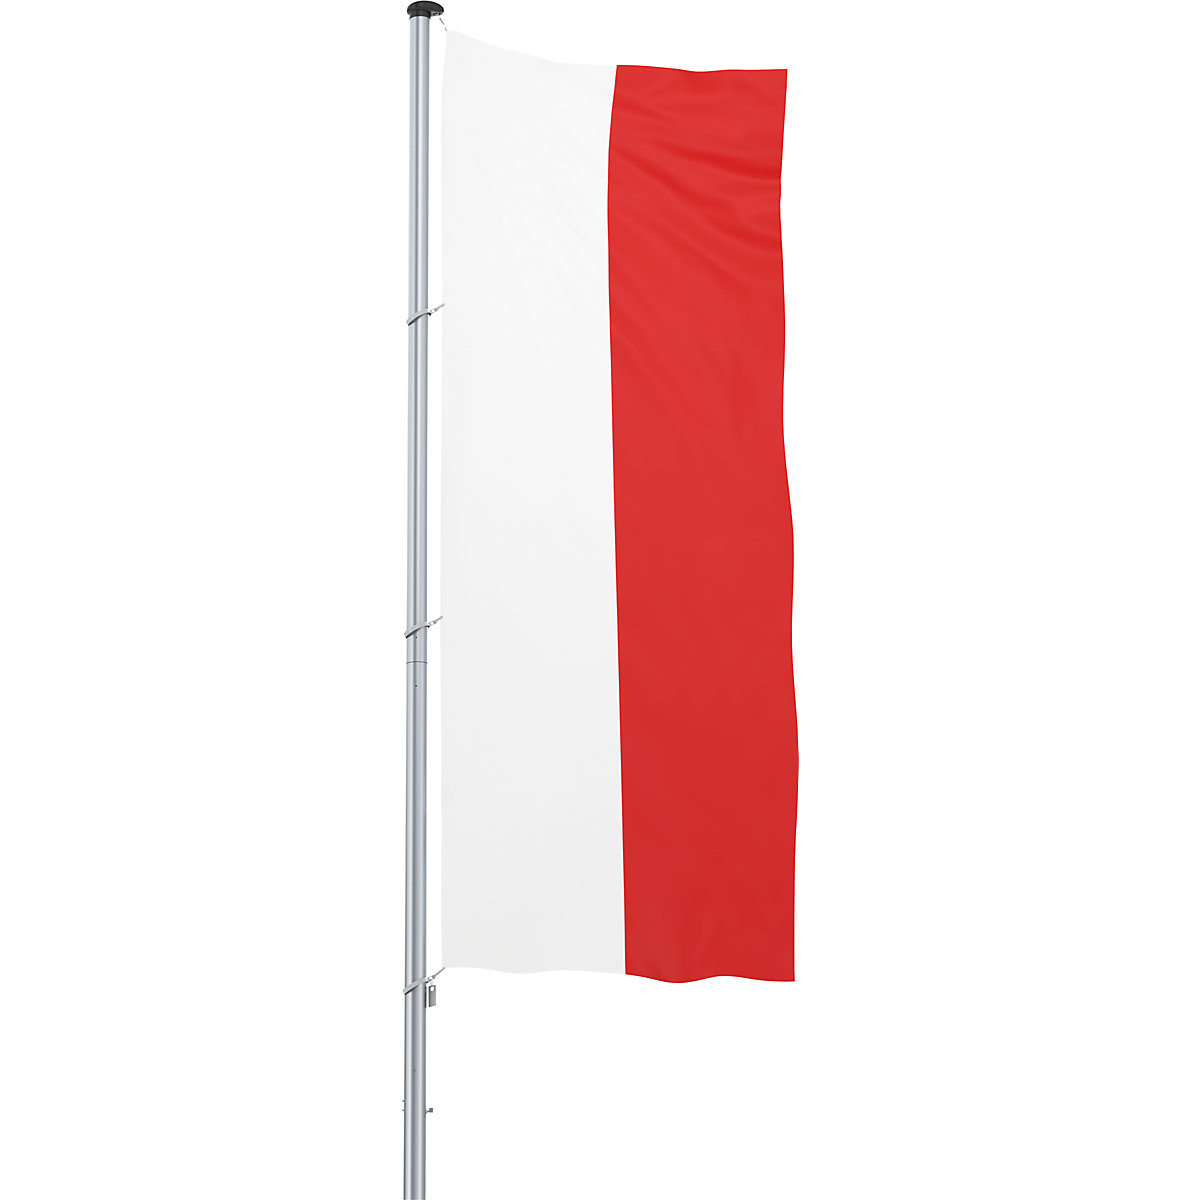 Mannus – Bandera para izar/bandera del país, formato 1,2 x 3 m, Polonia